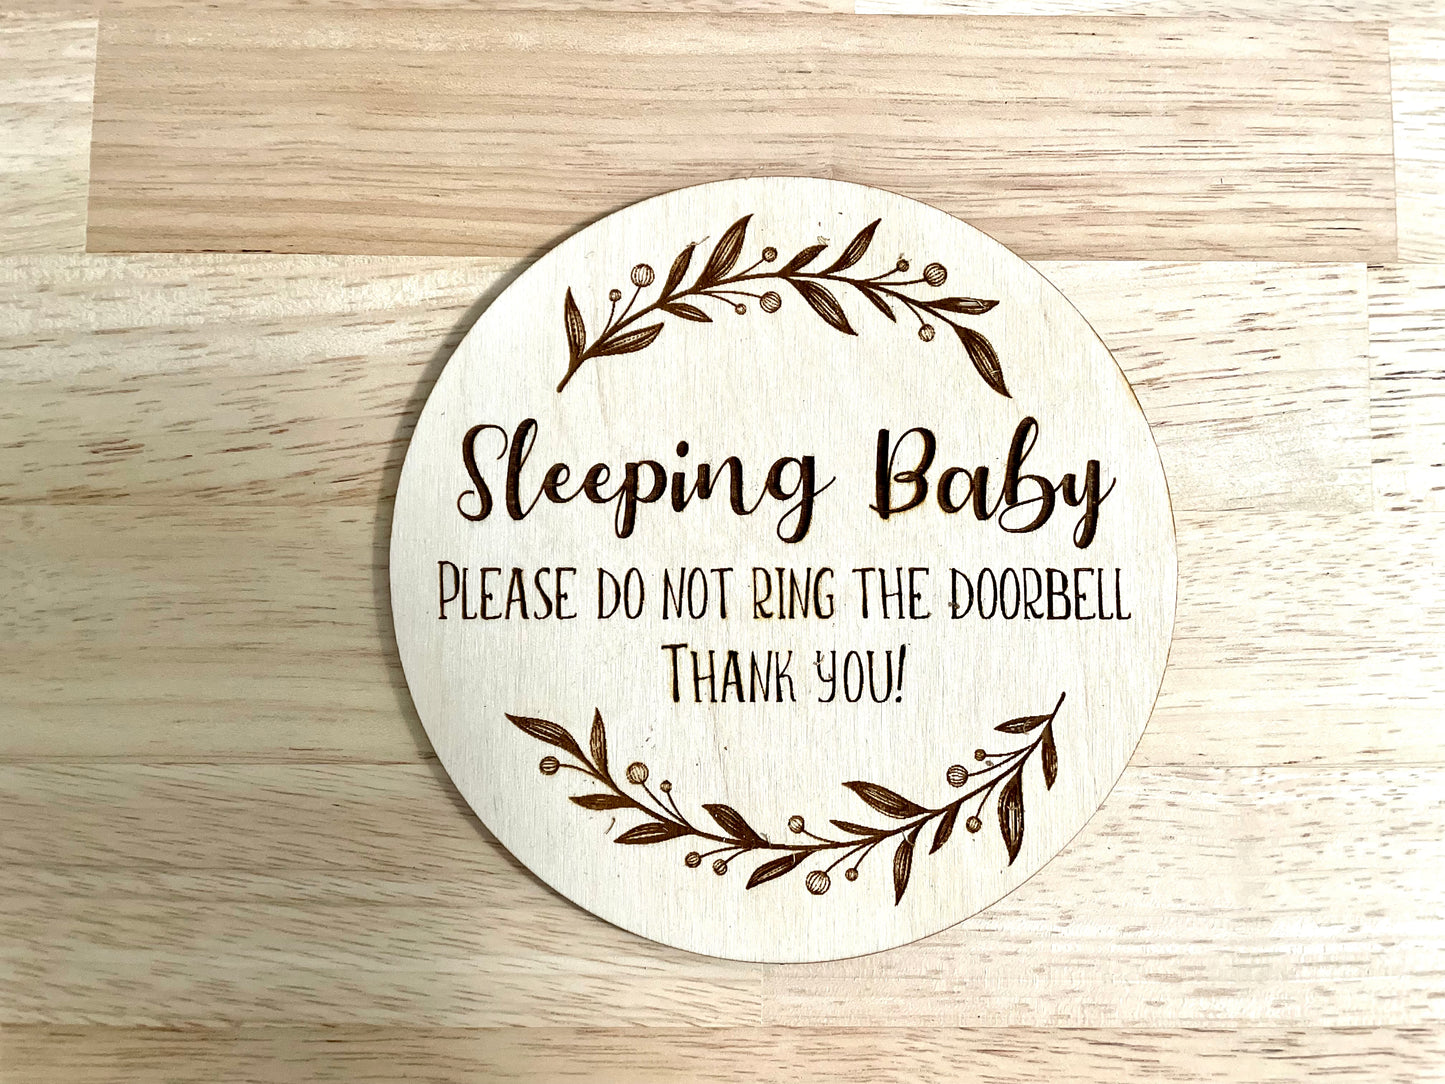 Round sleeping baby sign